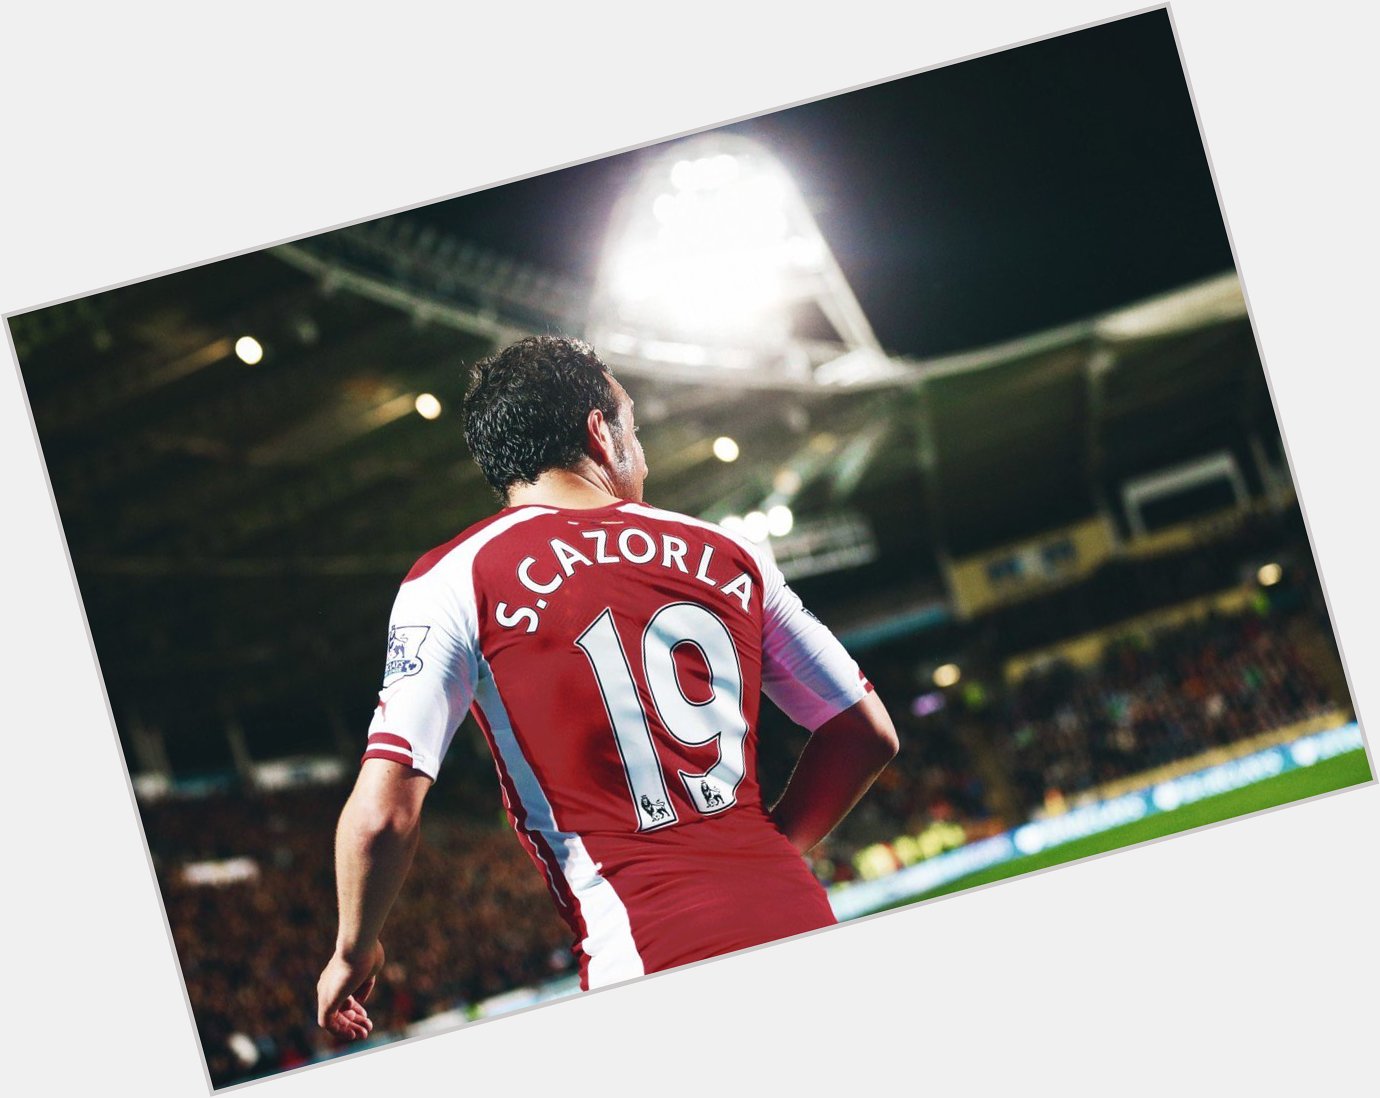 Happy Birthday Santi Cazorla! The best player of the Emirates era. 